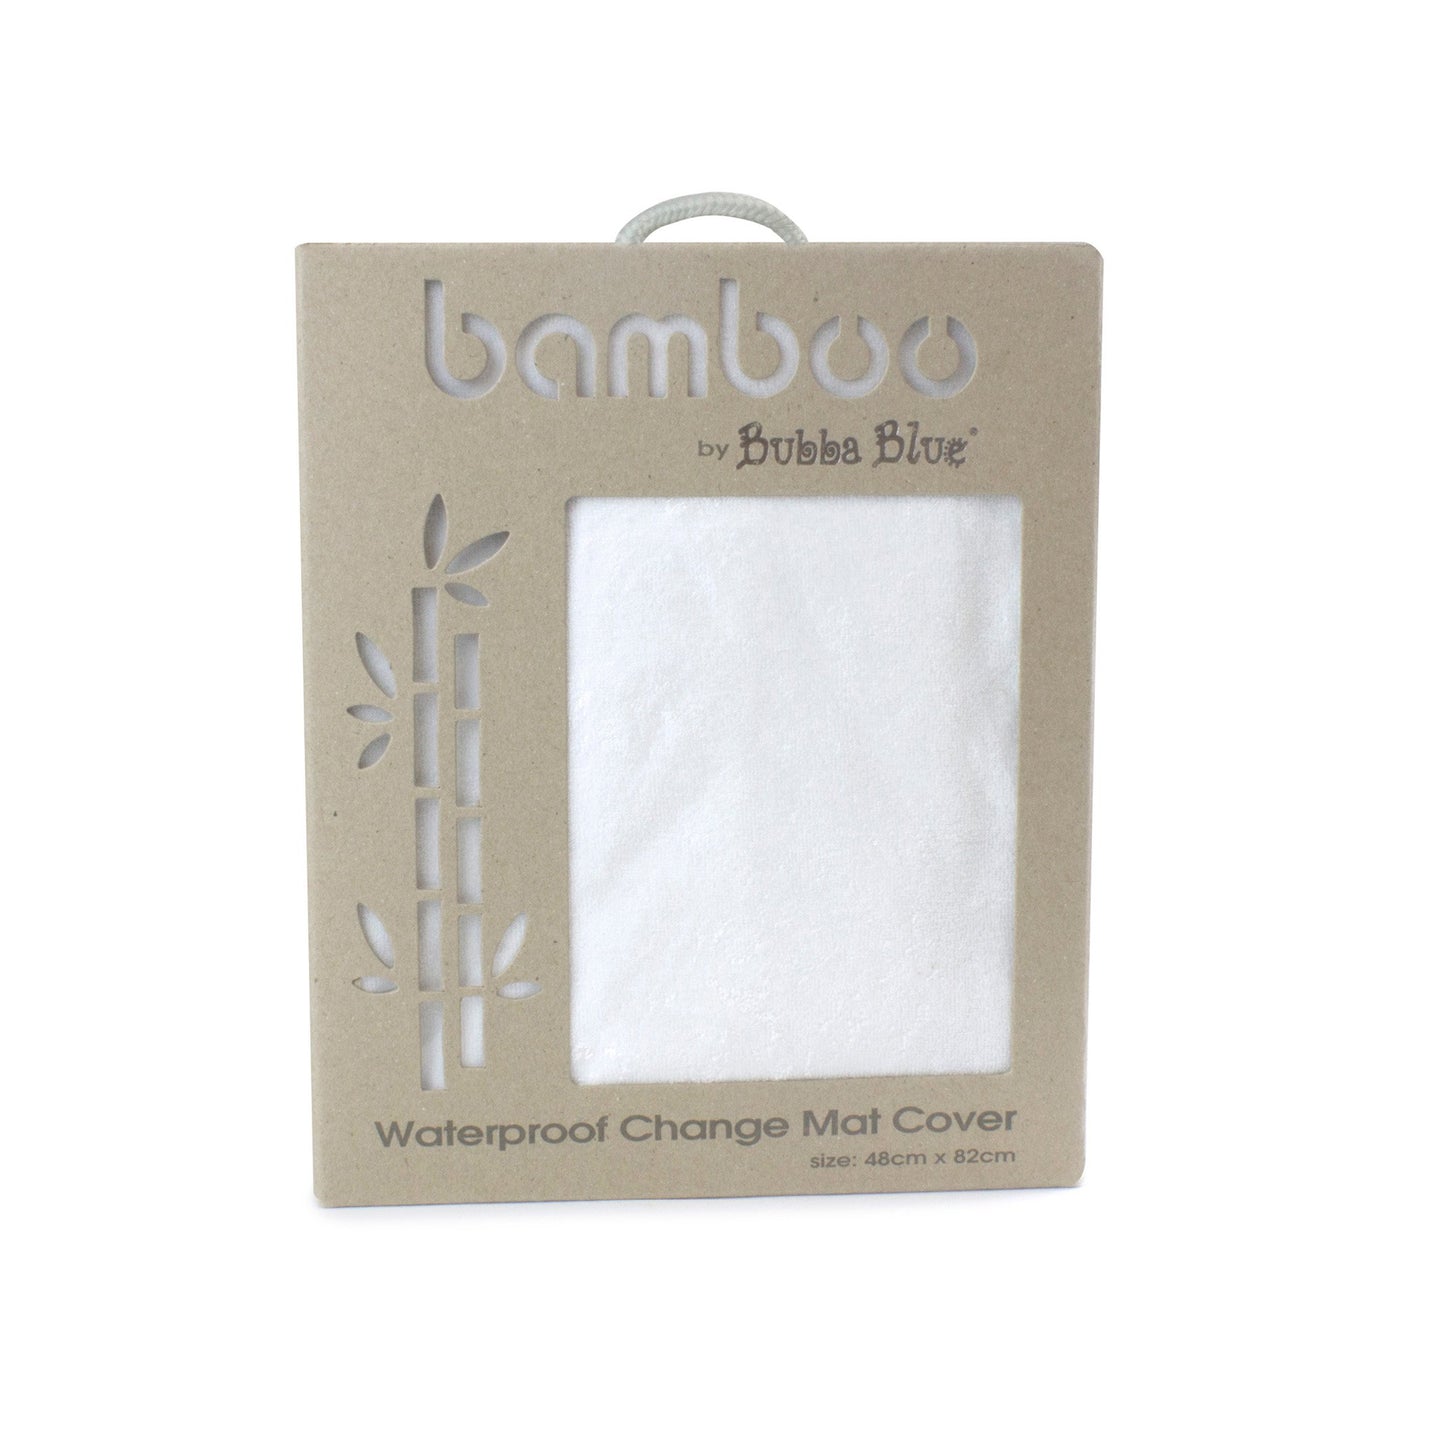 Bubba Blue White Bamboo Change Mat Cover (waterproof)